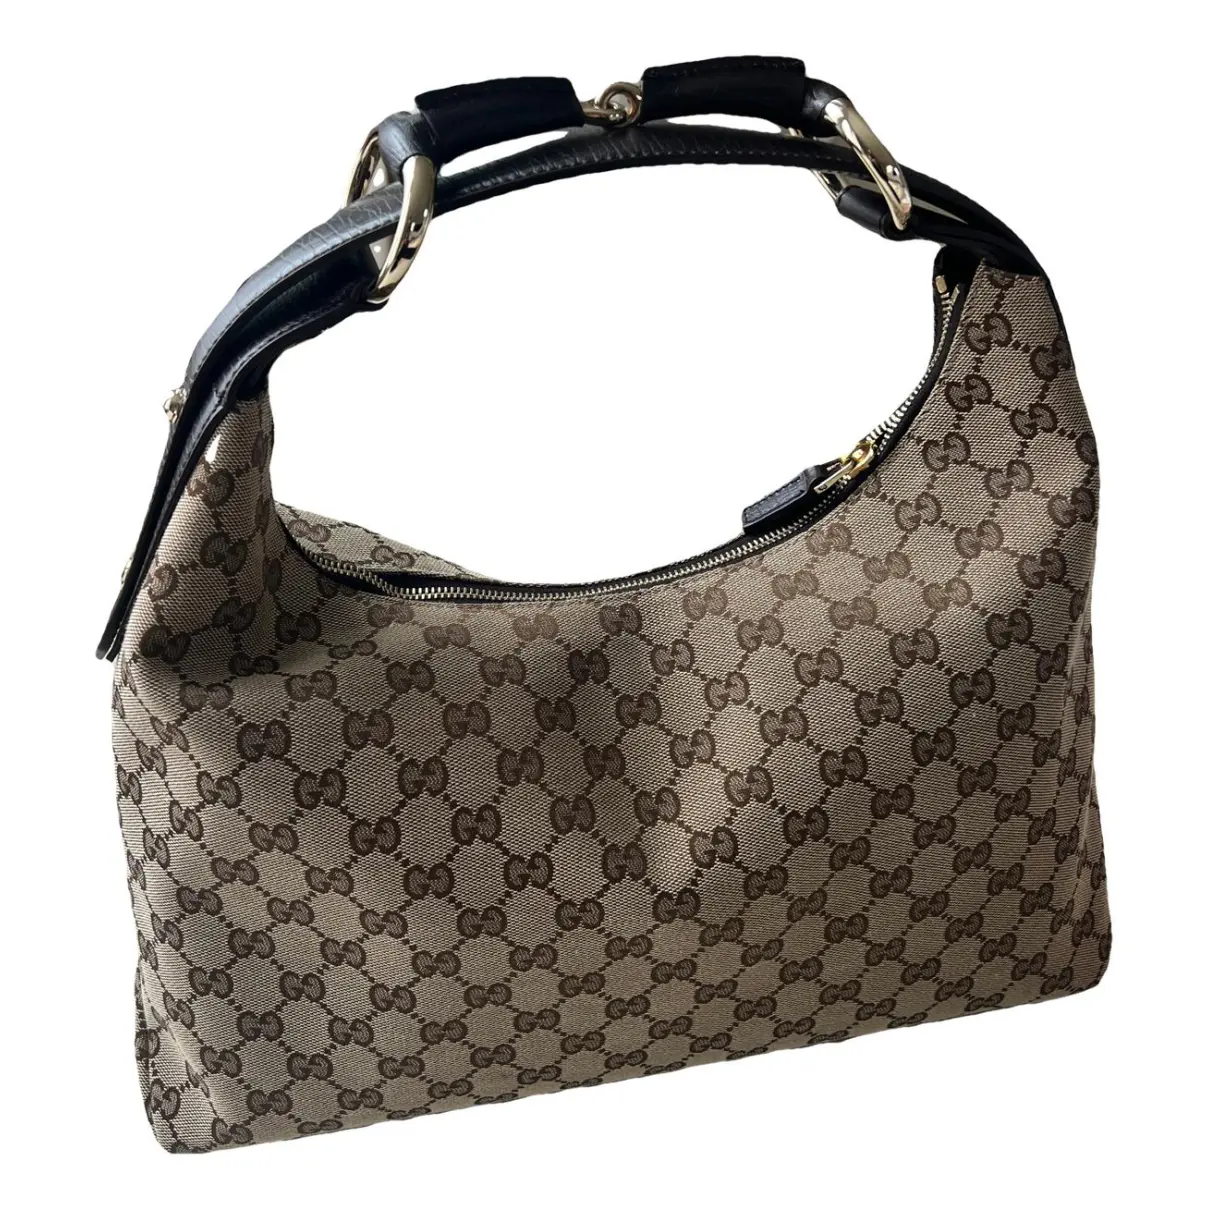 Miss GG leather handbag